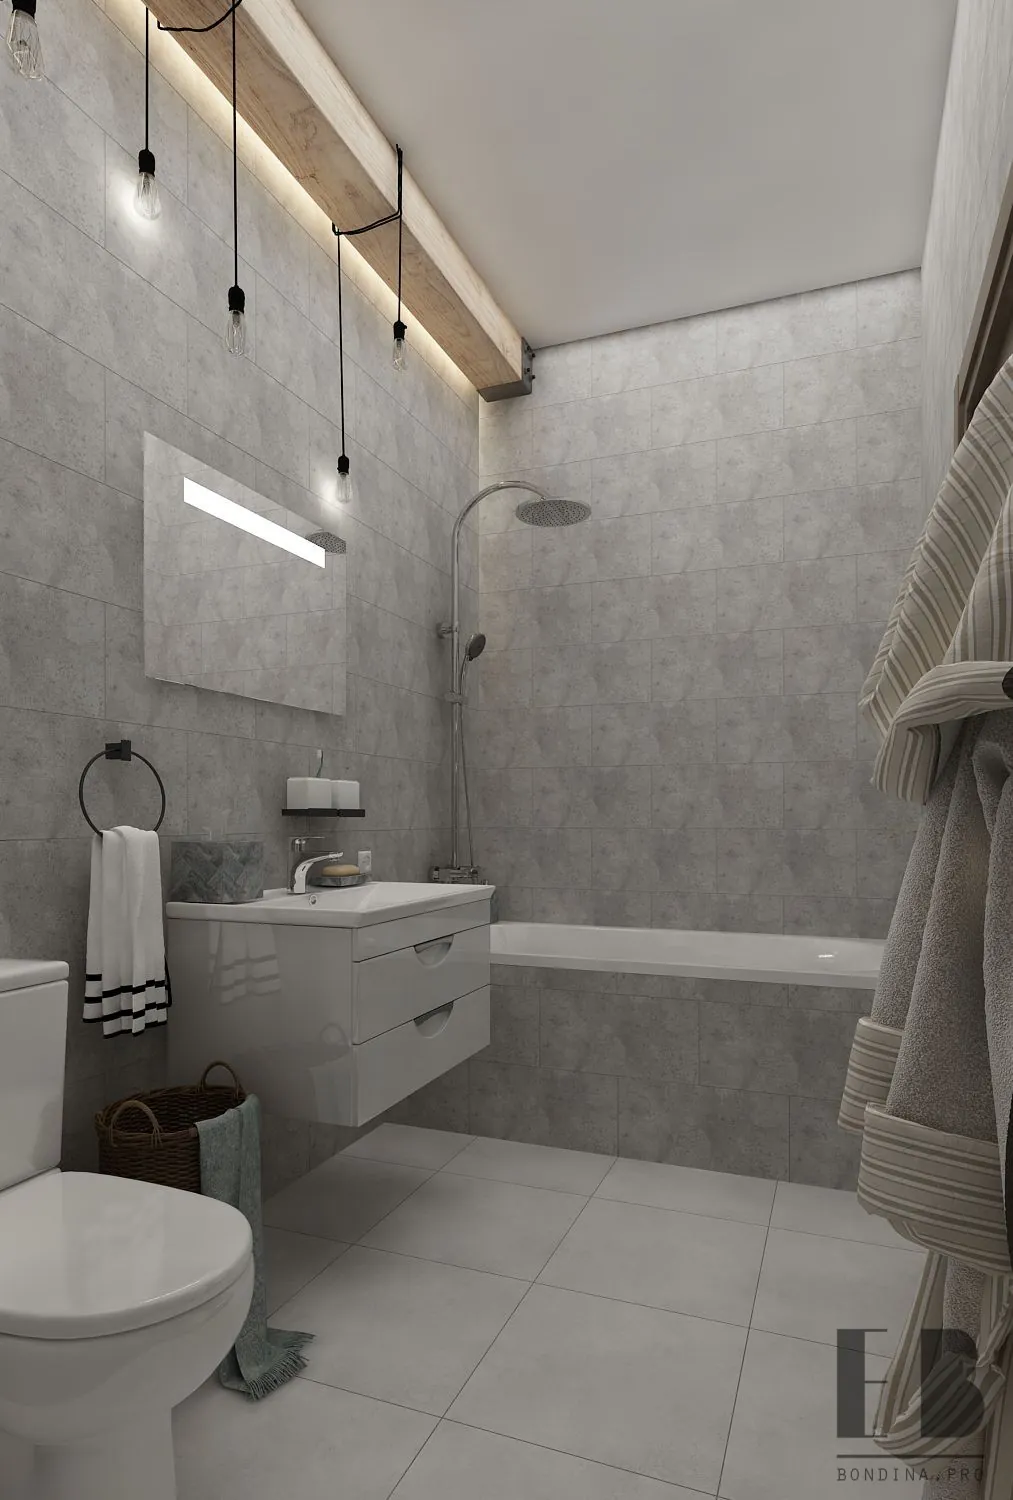 Strict and comfortable grey bathroom interior with bathtub